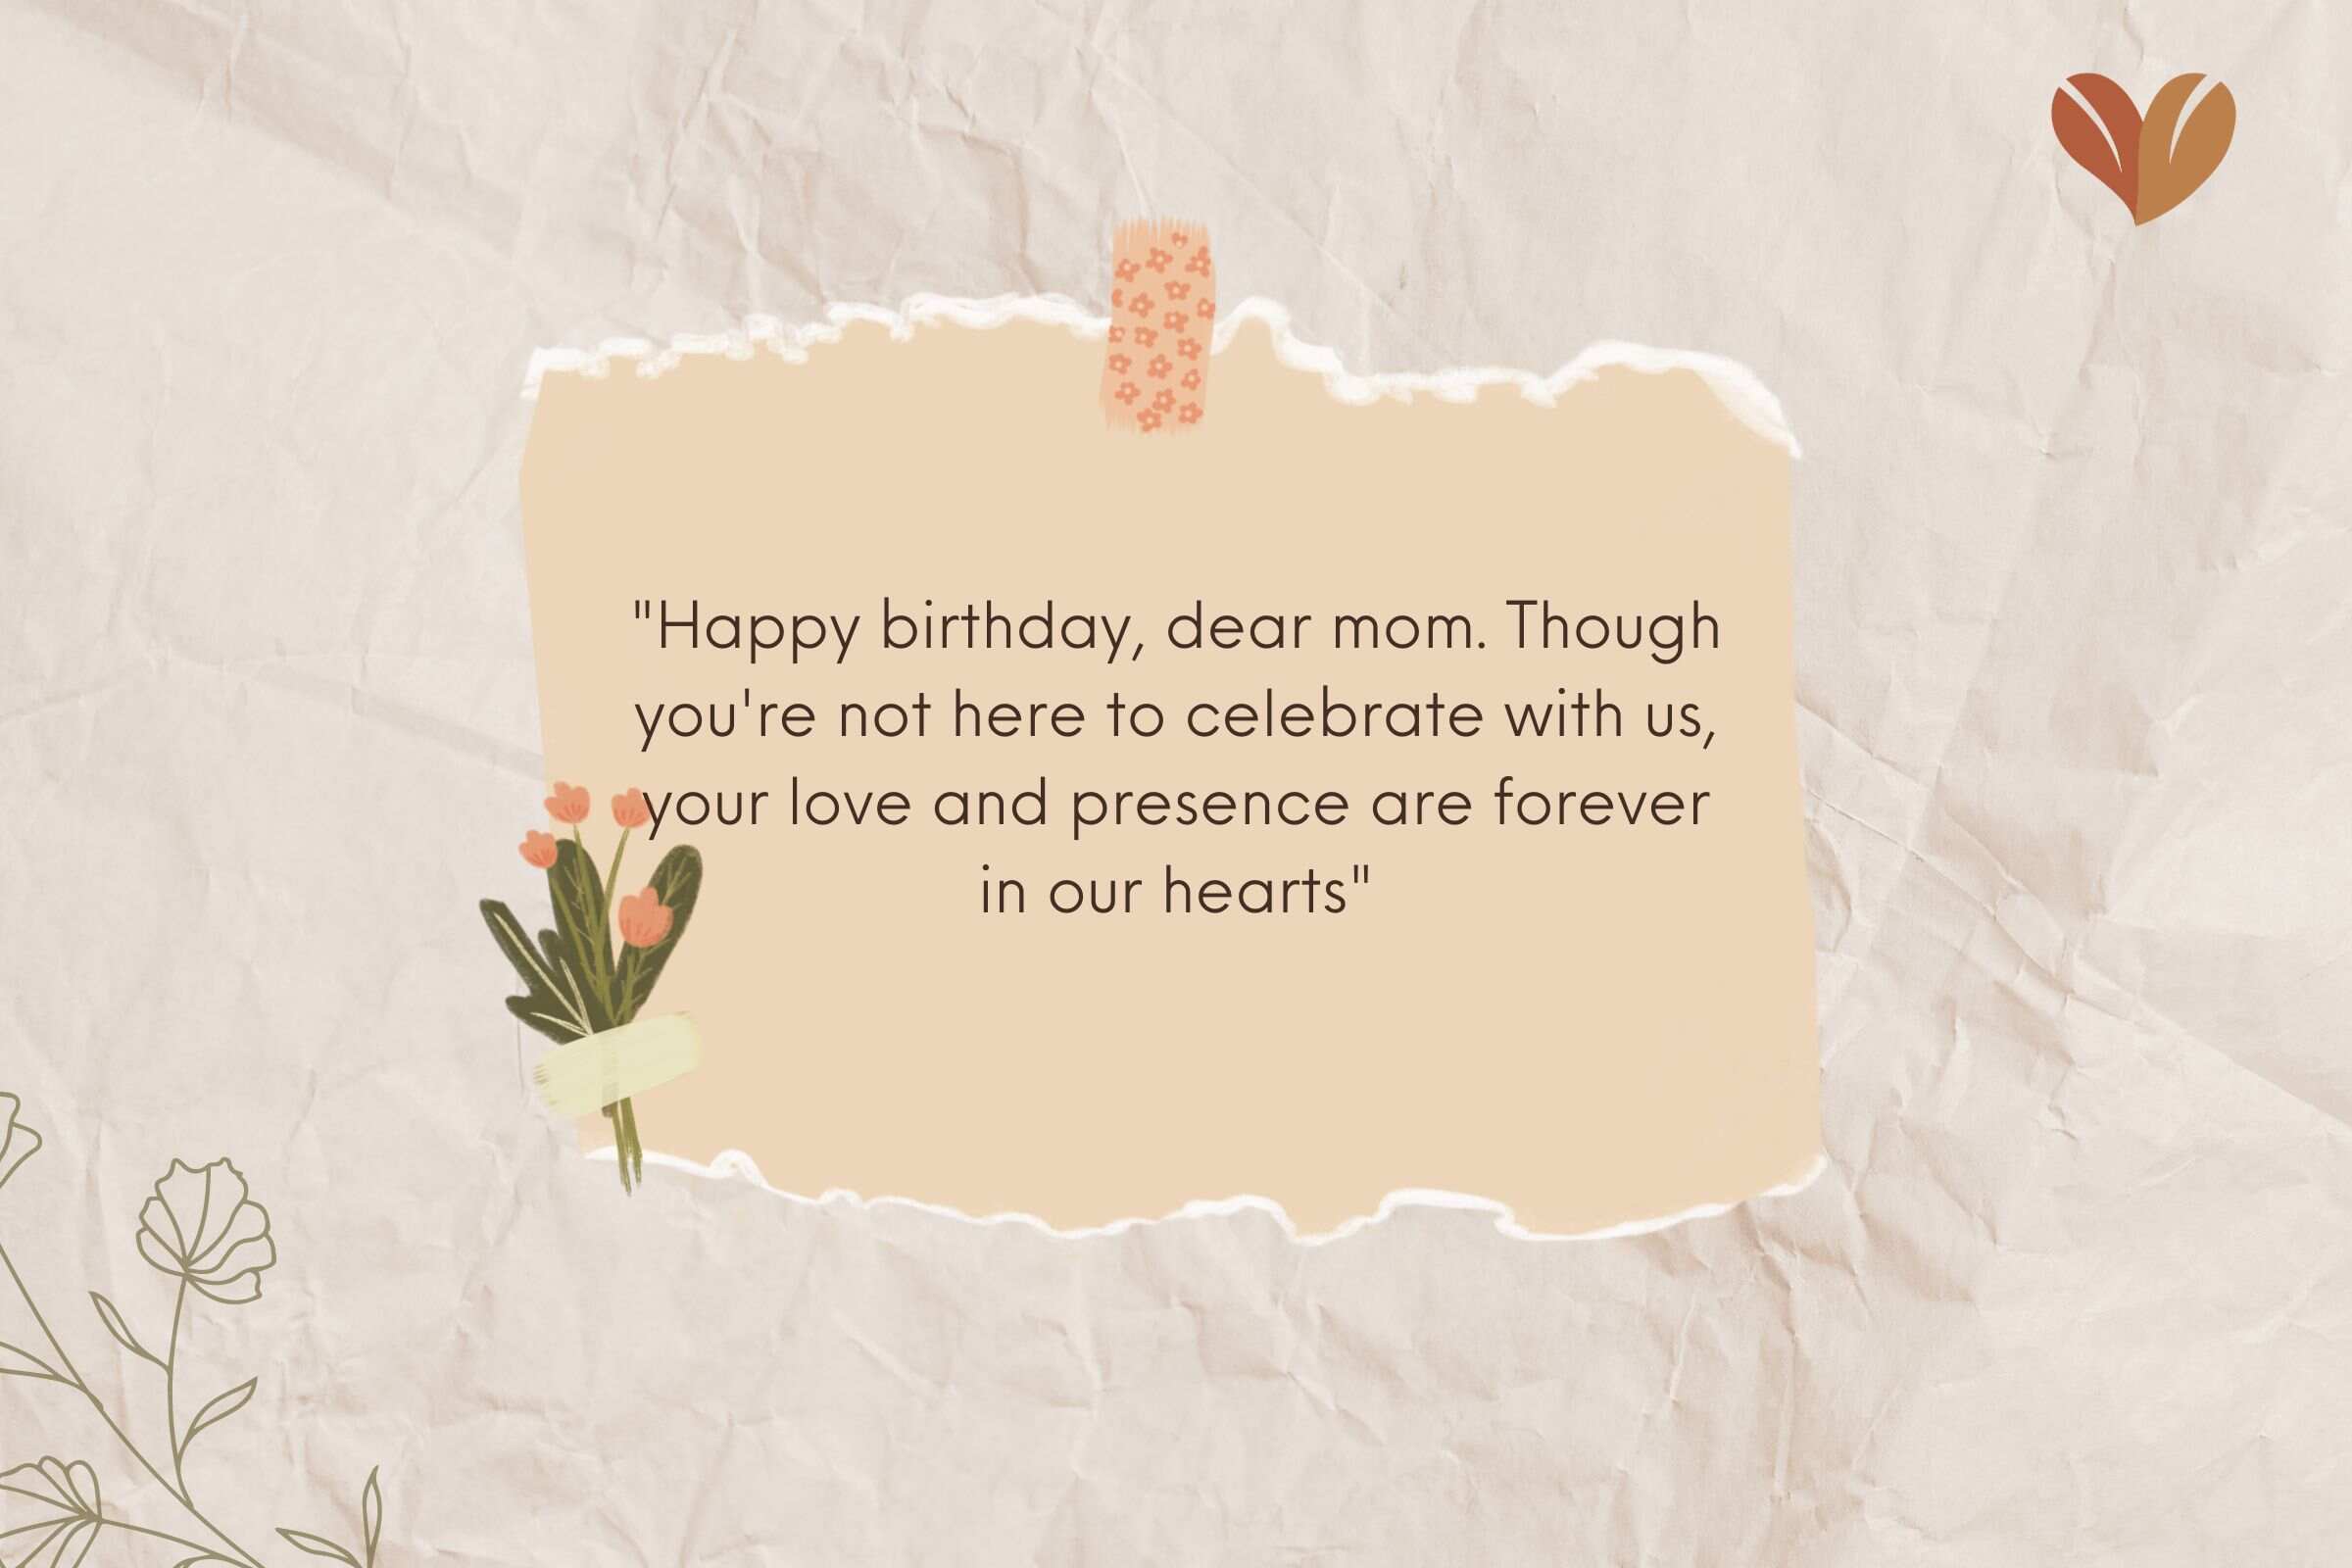 Heartfelt Happy Birthday Message to Mom in Heaven